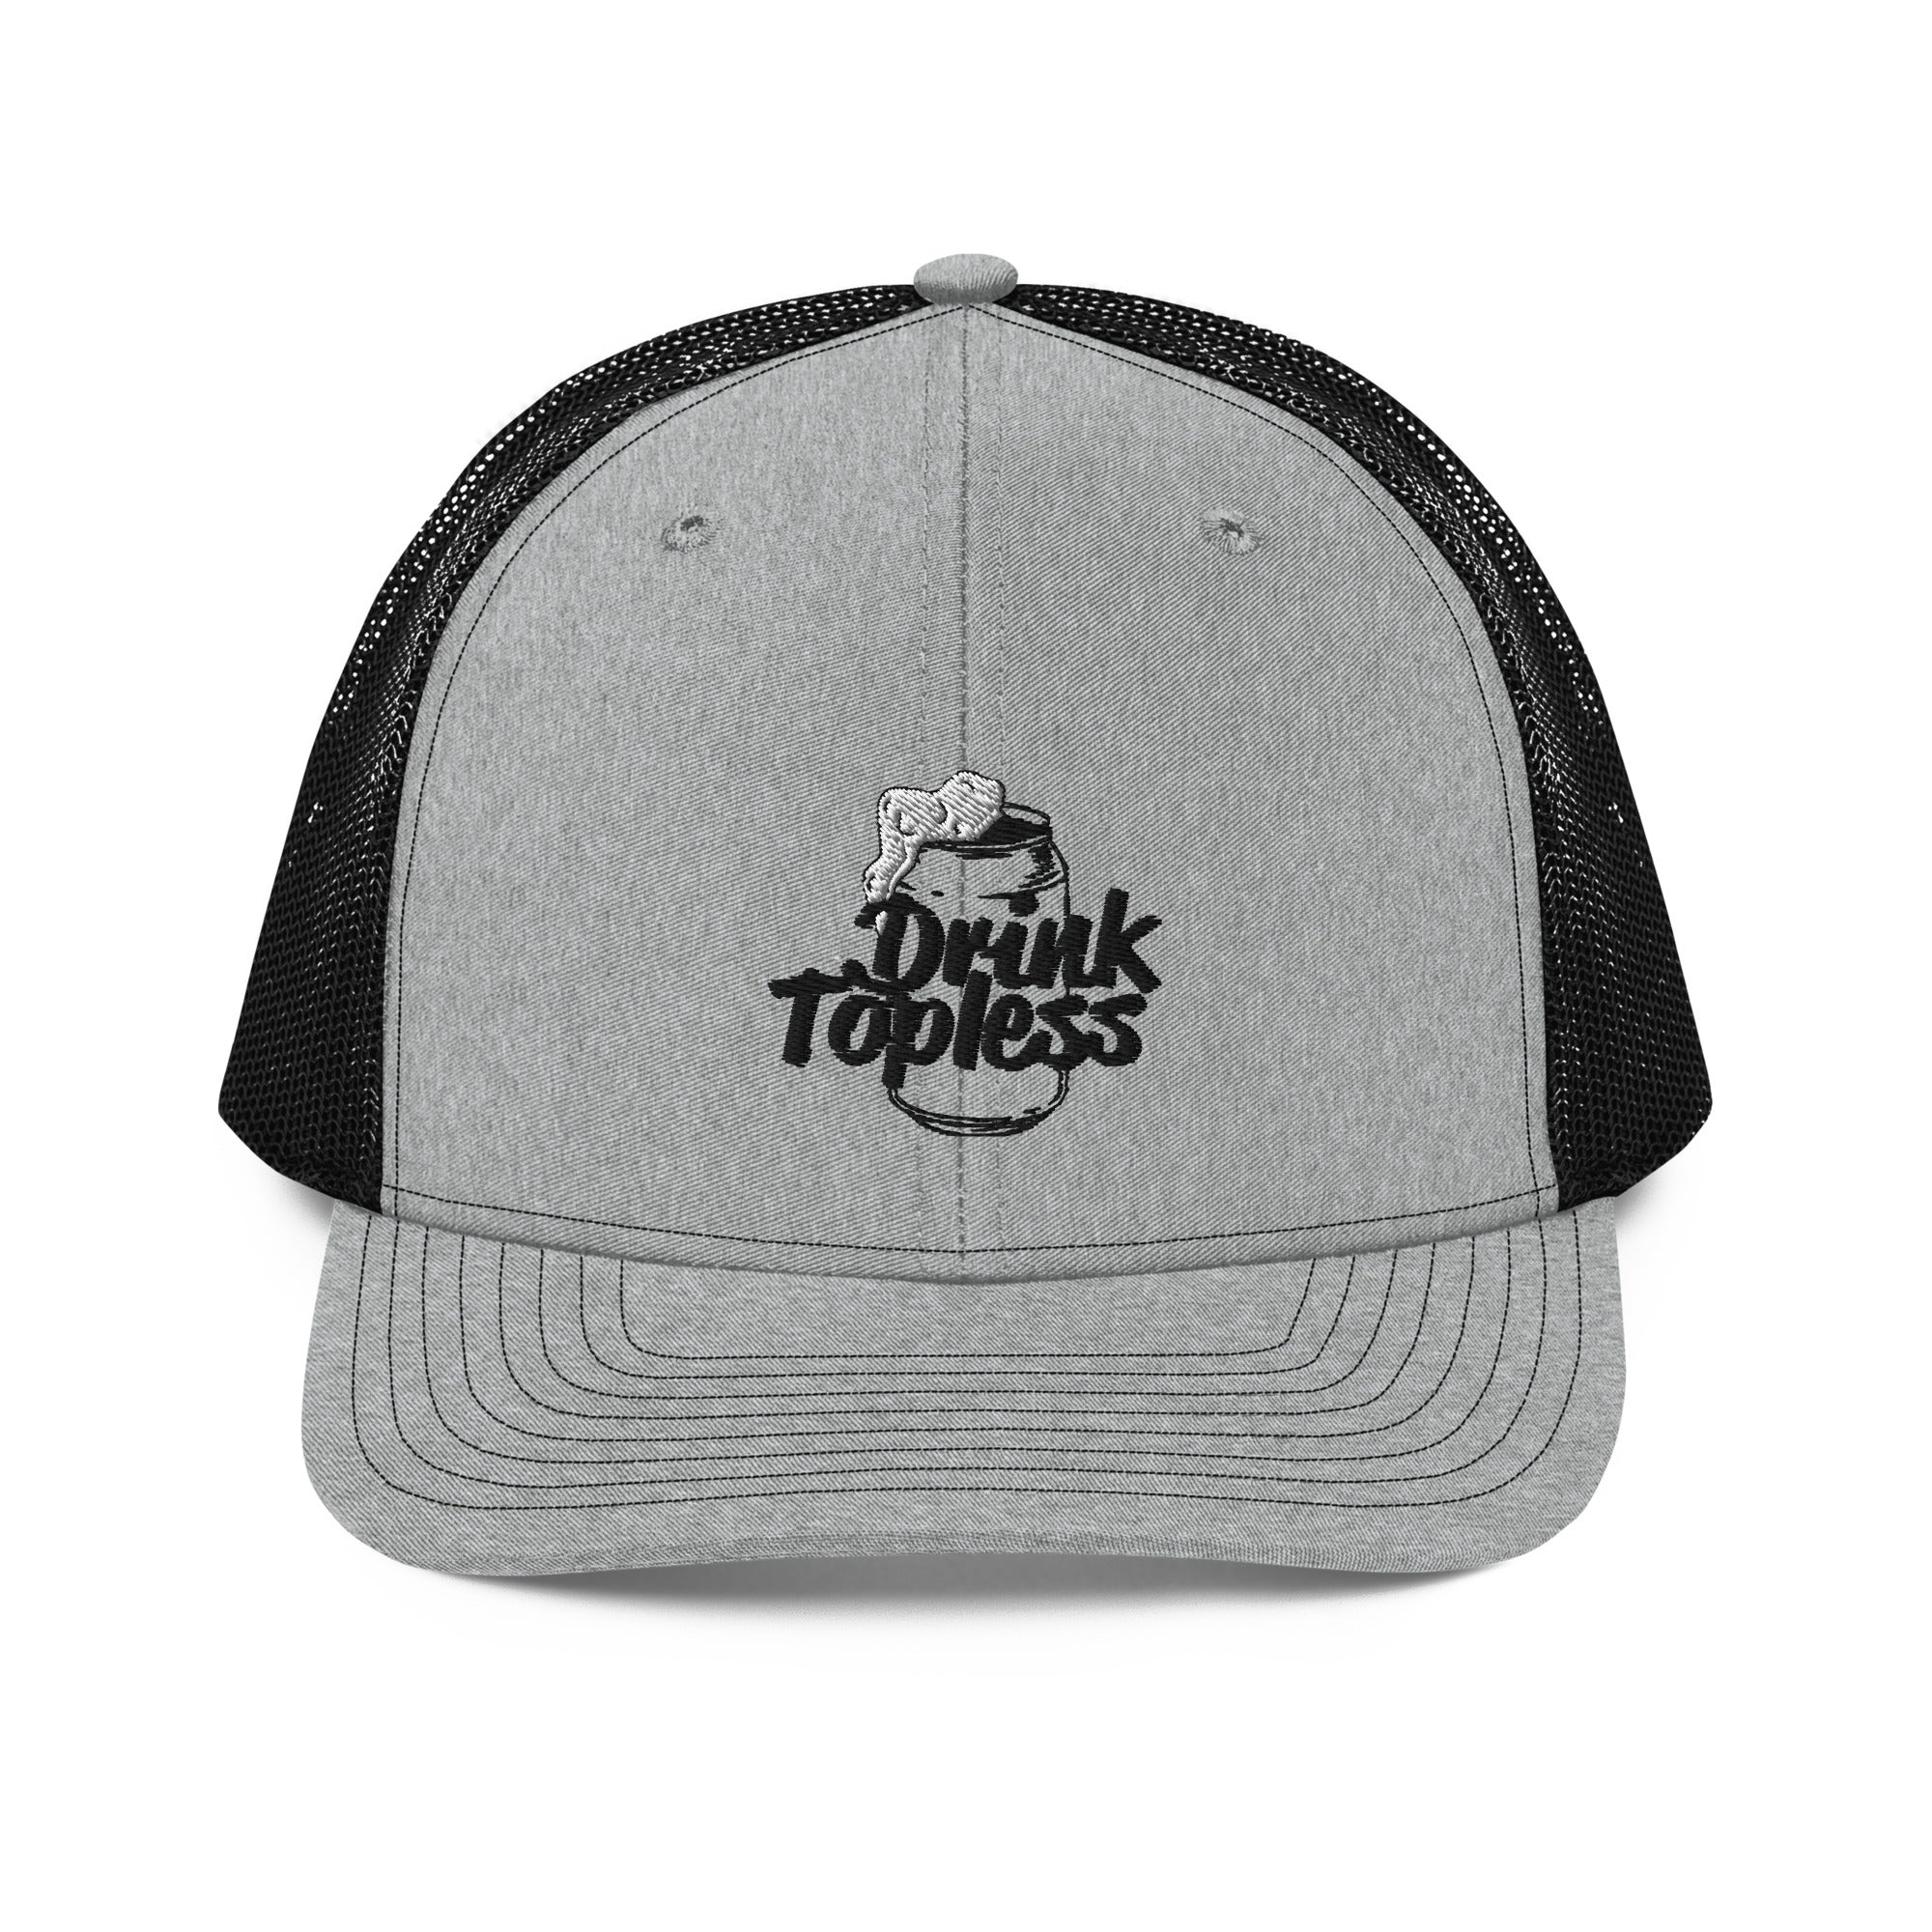 Drink Topless - Trucker Hat-Draft Top-Heather Grey / Black-Draft Top